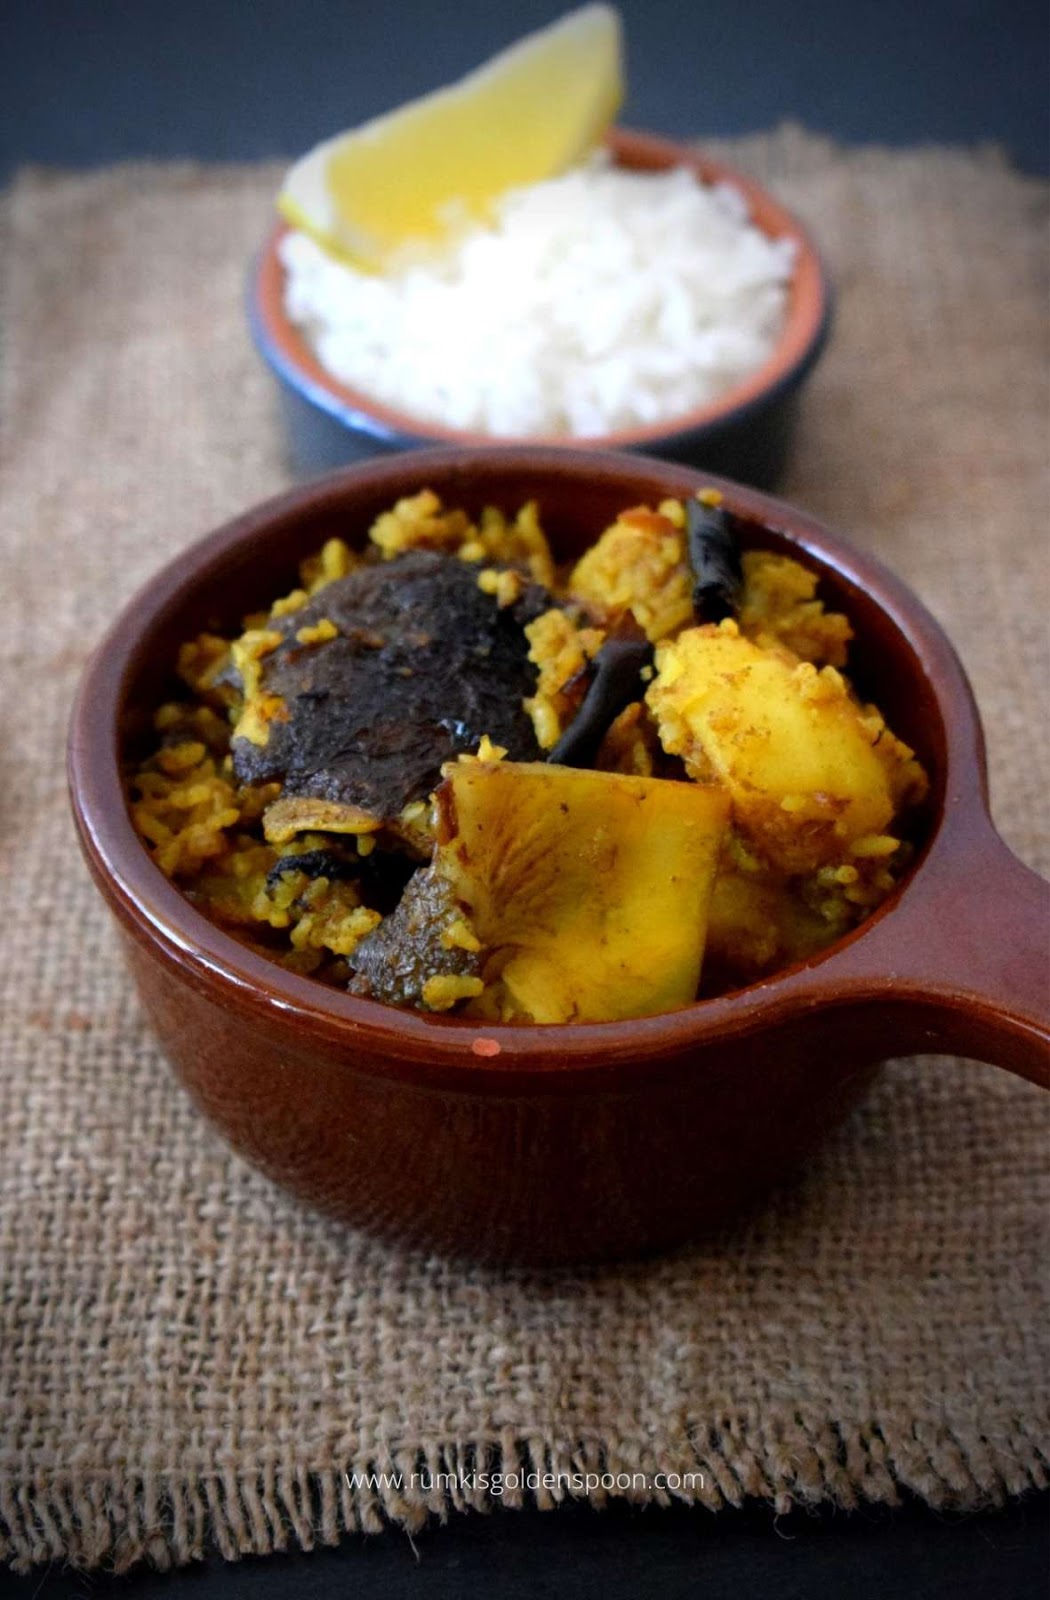 Muri Ghonto, Muri Ghonto recipe, Macher Muri Ghonto, Macher Muri Ghonto recipe, how to make Muri Ghonto, bengali traditional food, traditional food of Bengali, traditional bengali food, ghonto recipe, Indian recipe, fish head recipe, recipe for fish head, recipe for fish head curry, macher matha diye muri ghonto recipe , macher matha diye recipe, macher matha recipe, bengali recipe fish, bengali recipe, Bengali recipes fish, Bengali recipe for fish, Bengali recipe of fish, Rumki's Golden Spoon